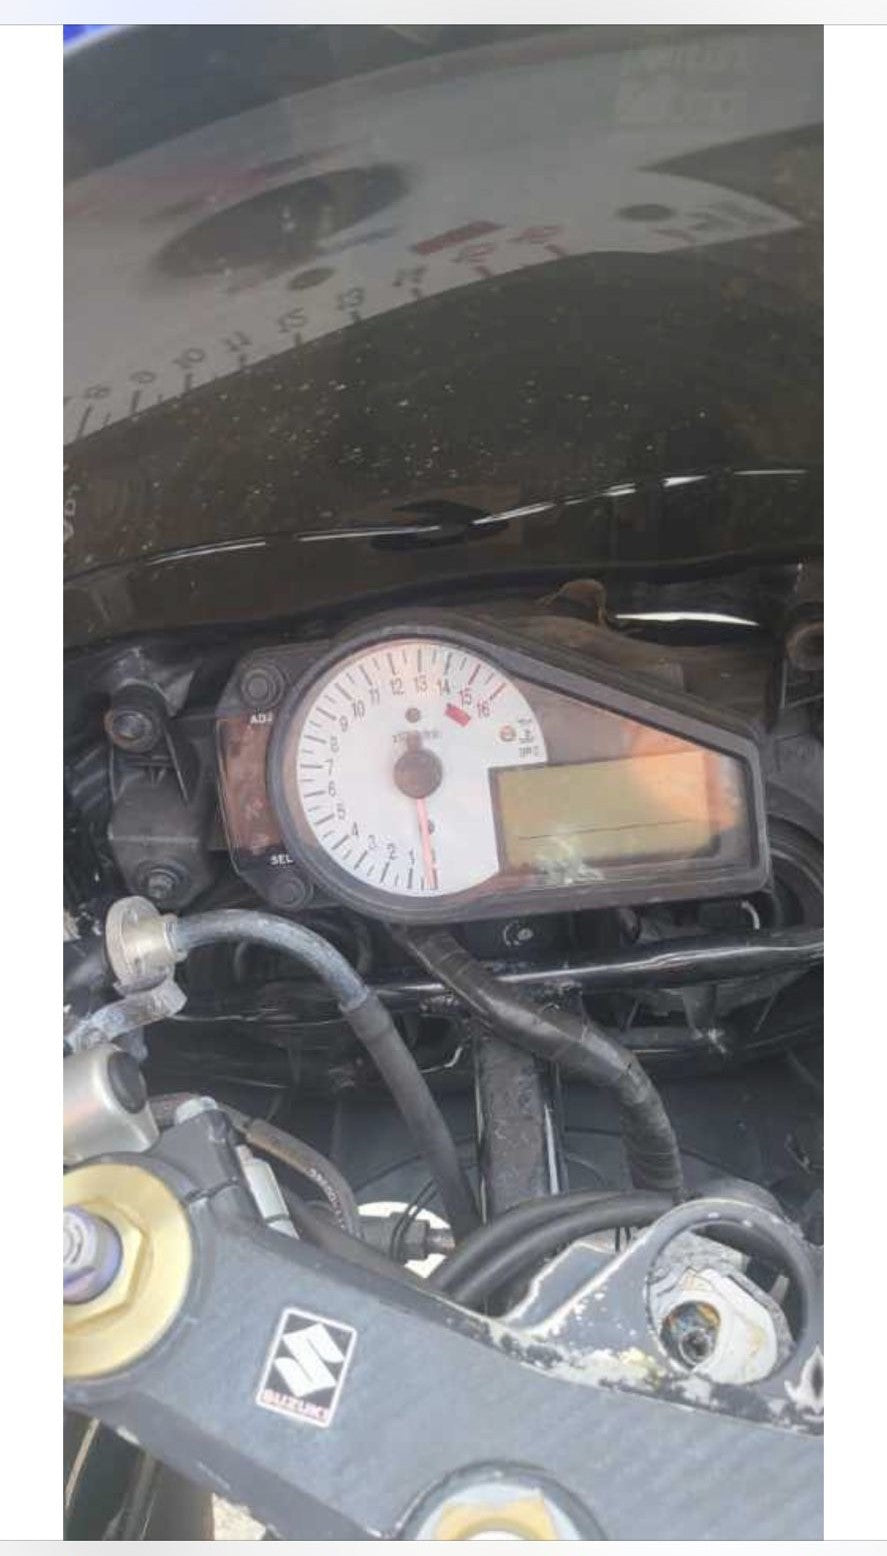 00 - 03 Suzuki GSXR For Parts Motor Gas Tank Fuel Pump Rims Headlight and More